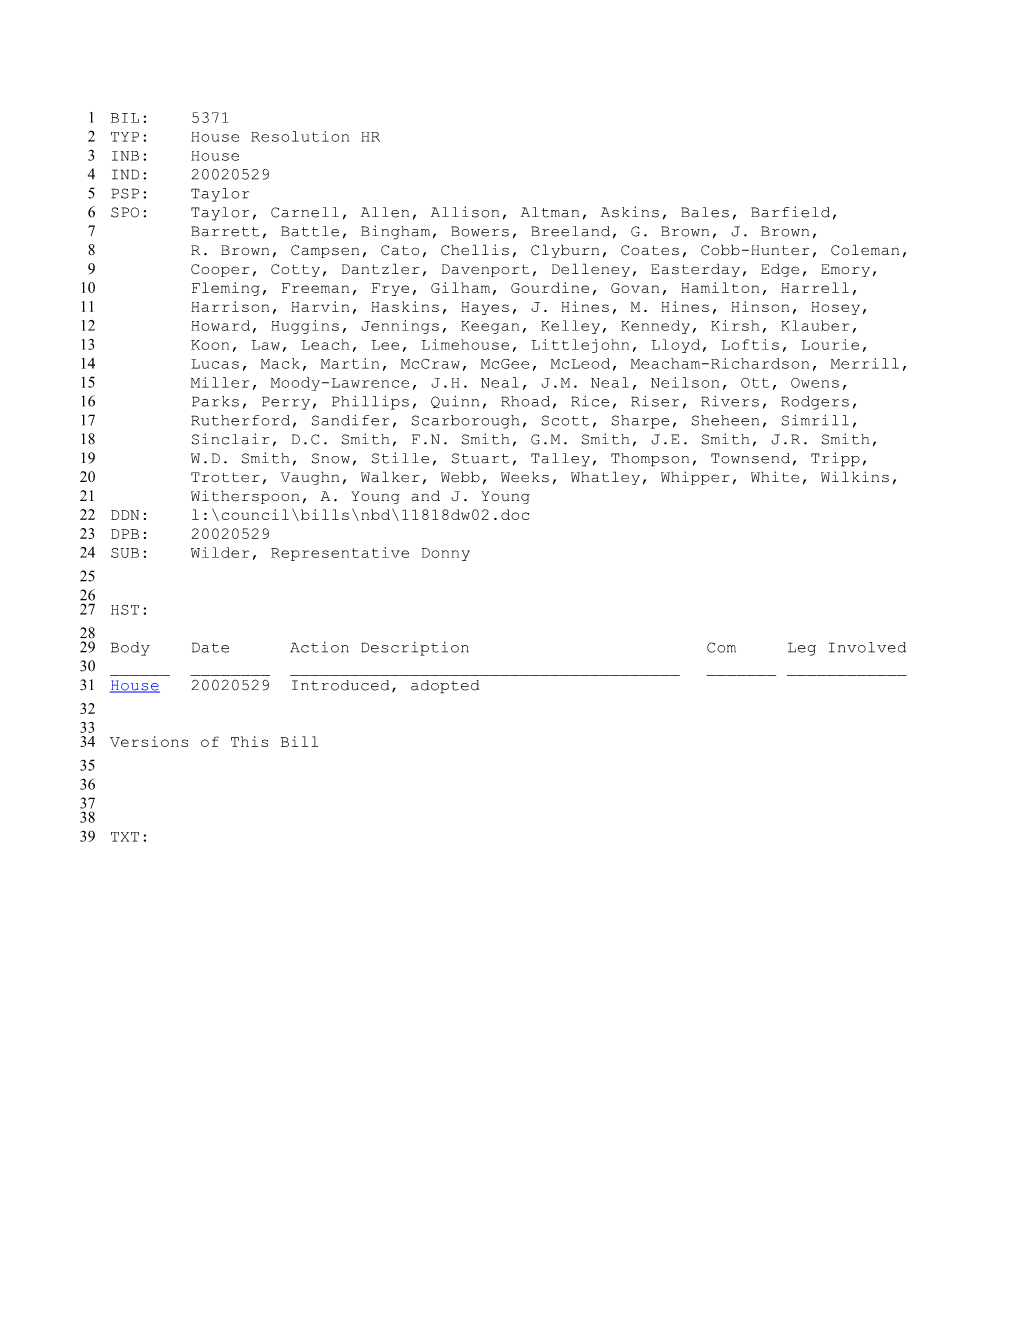 2001-2002 Bill 5371: Wilder, Representative Donny - South Carolina Legislature Online